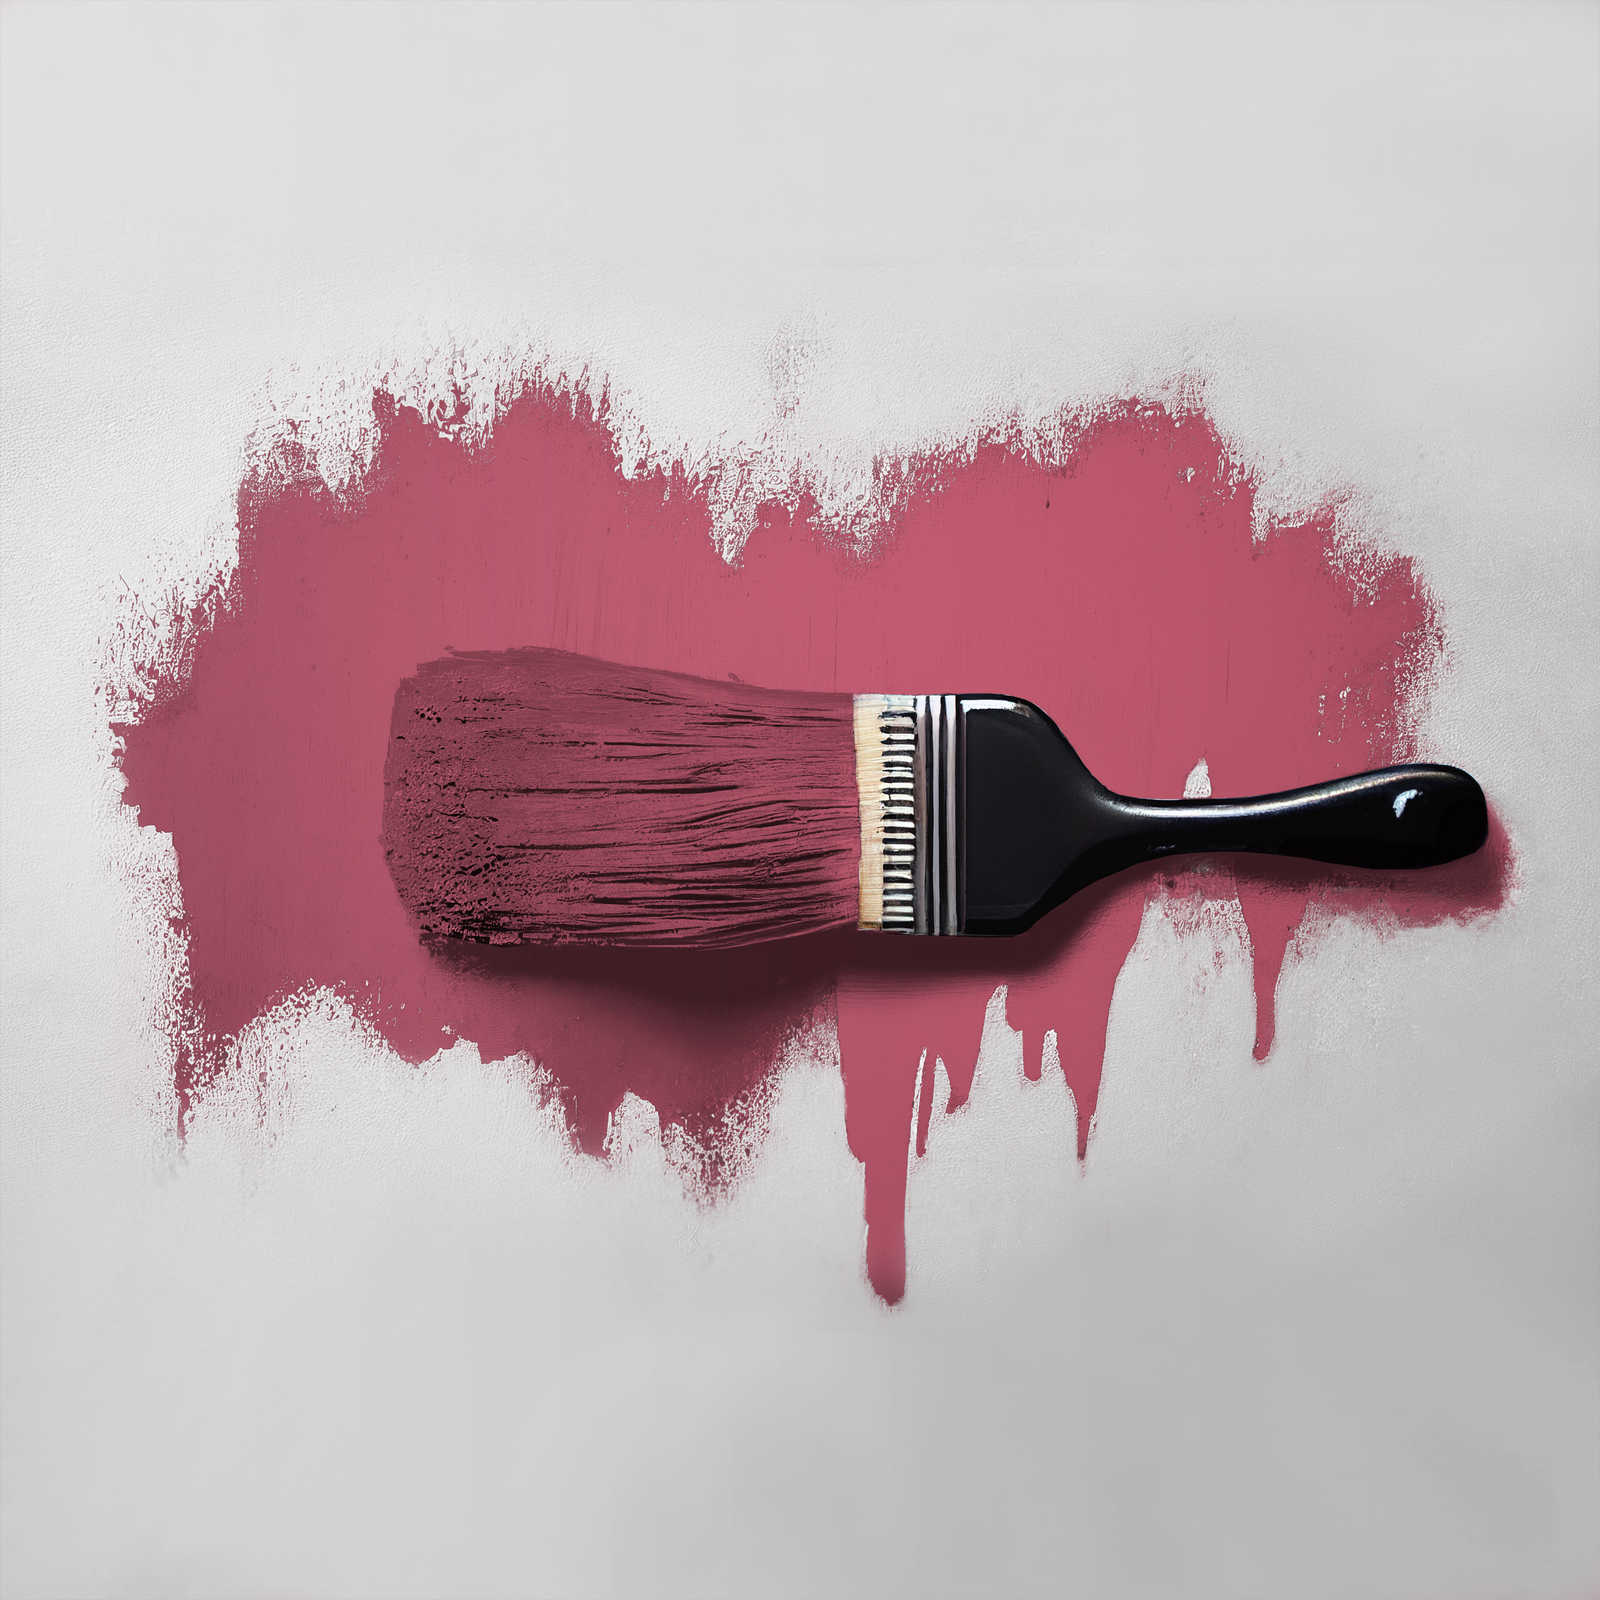             Wall Paint TCK7011 »Rosy Raspberry« in intensive dark pink – 2.5 litre
        